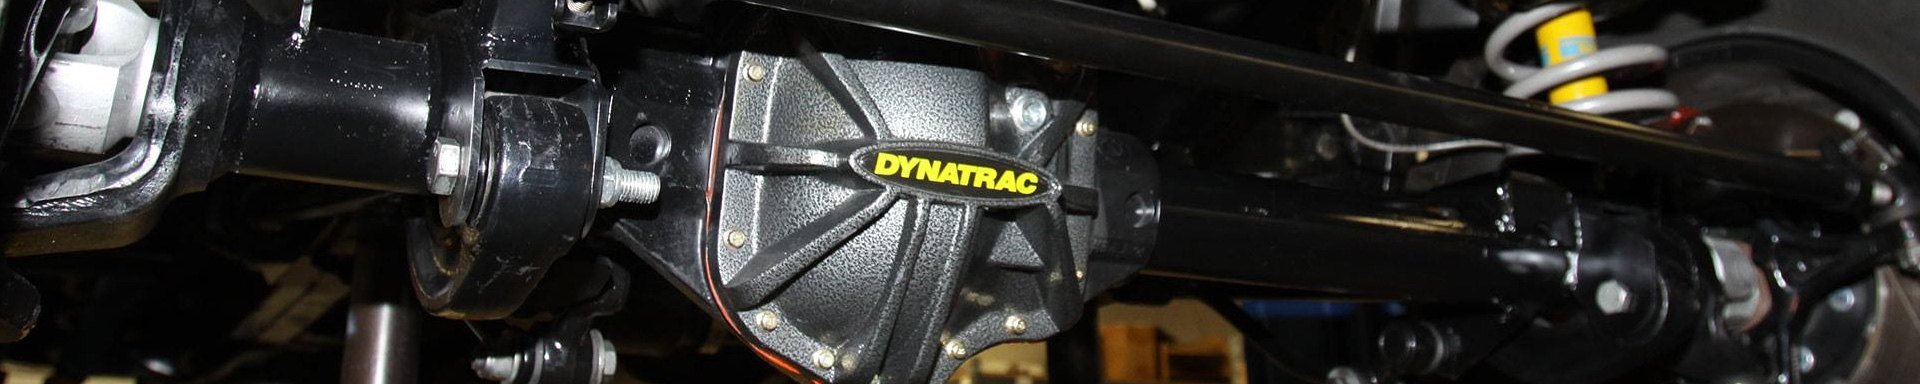 Dynatrac Brakes